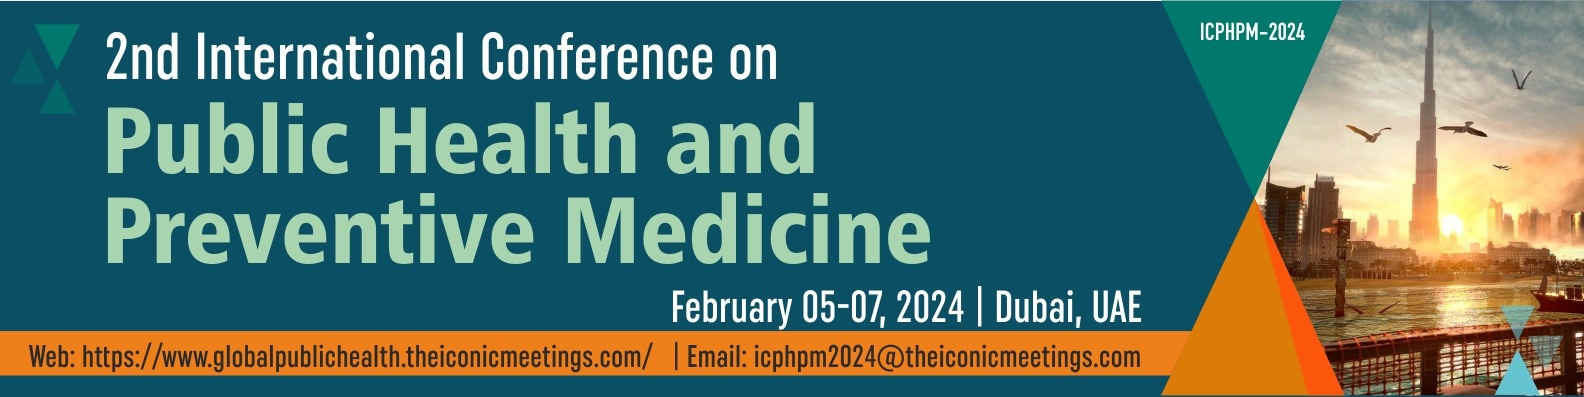 International Conference on Public Health and Preventive Medicine 2024